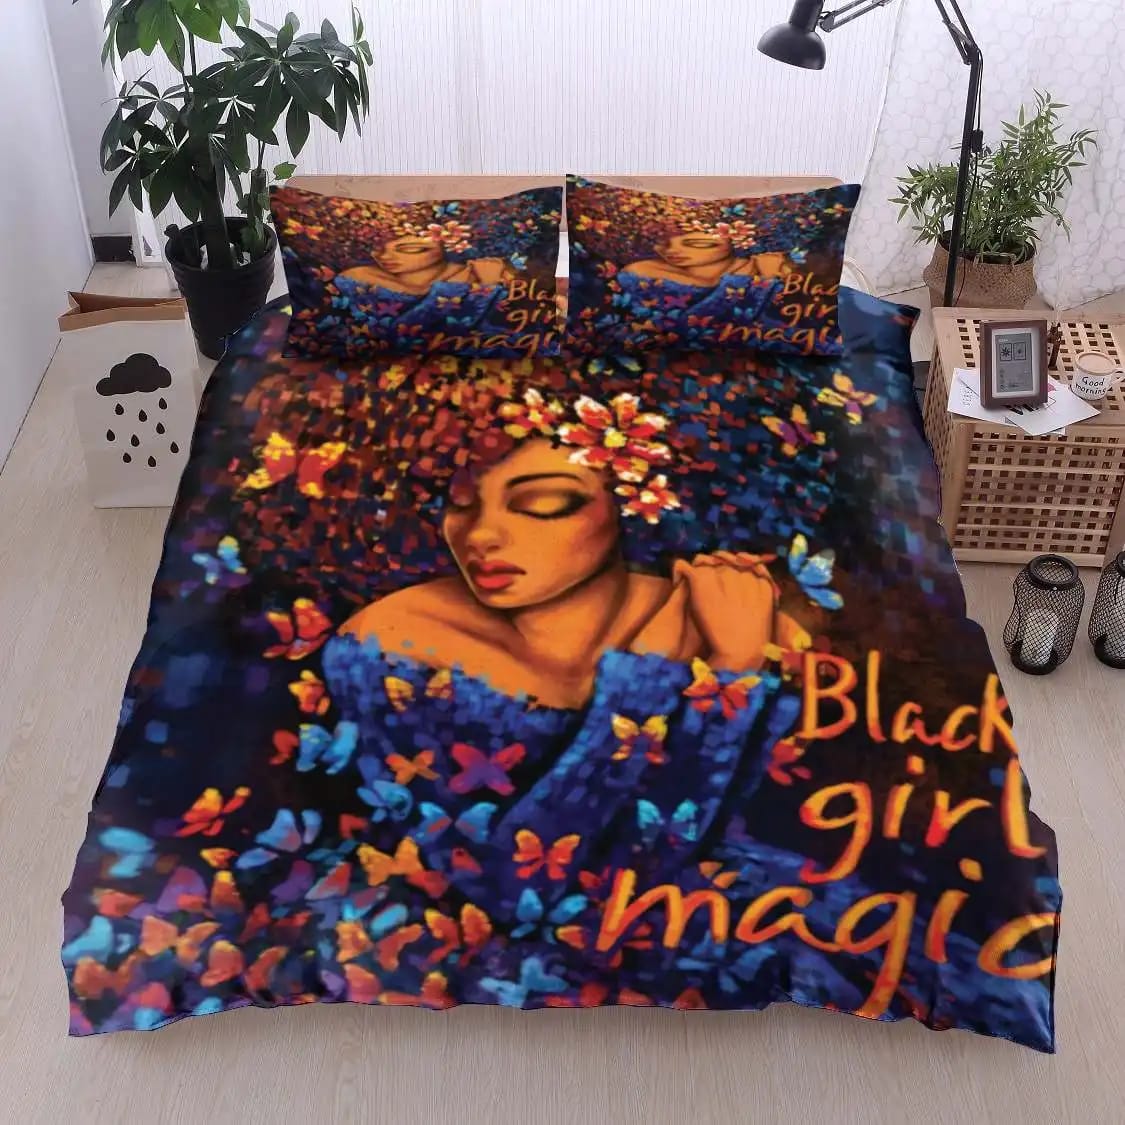 Custom Black Girl Magic Quilt Bedding Sets